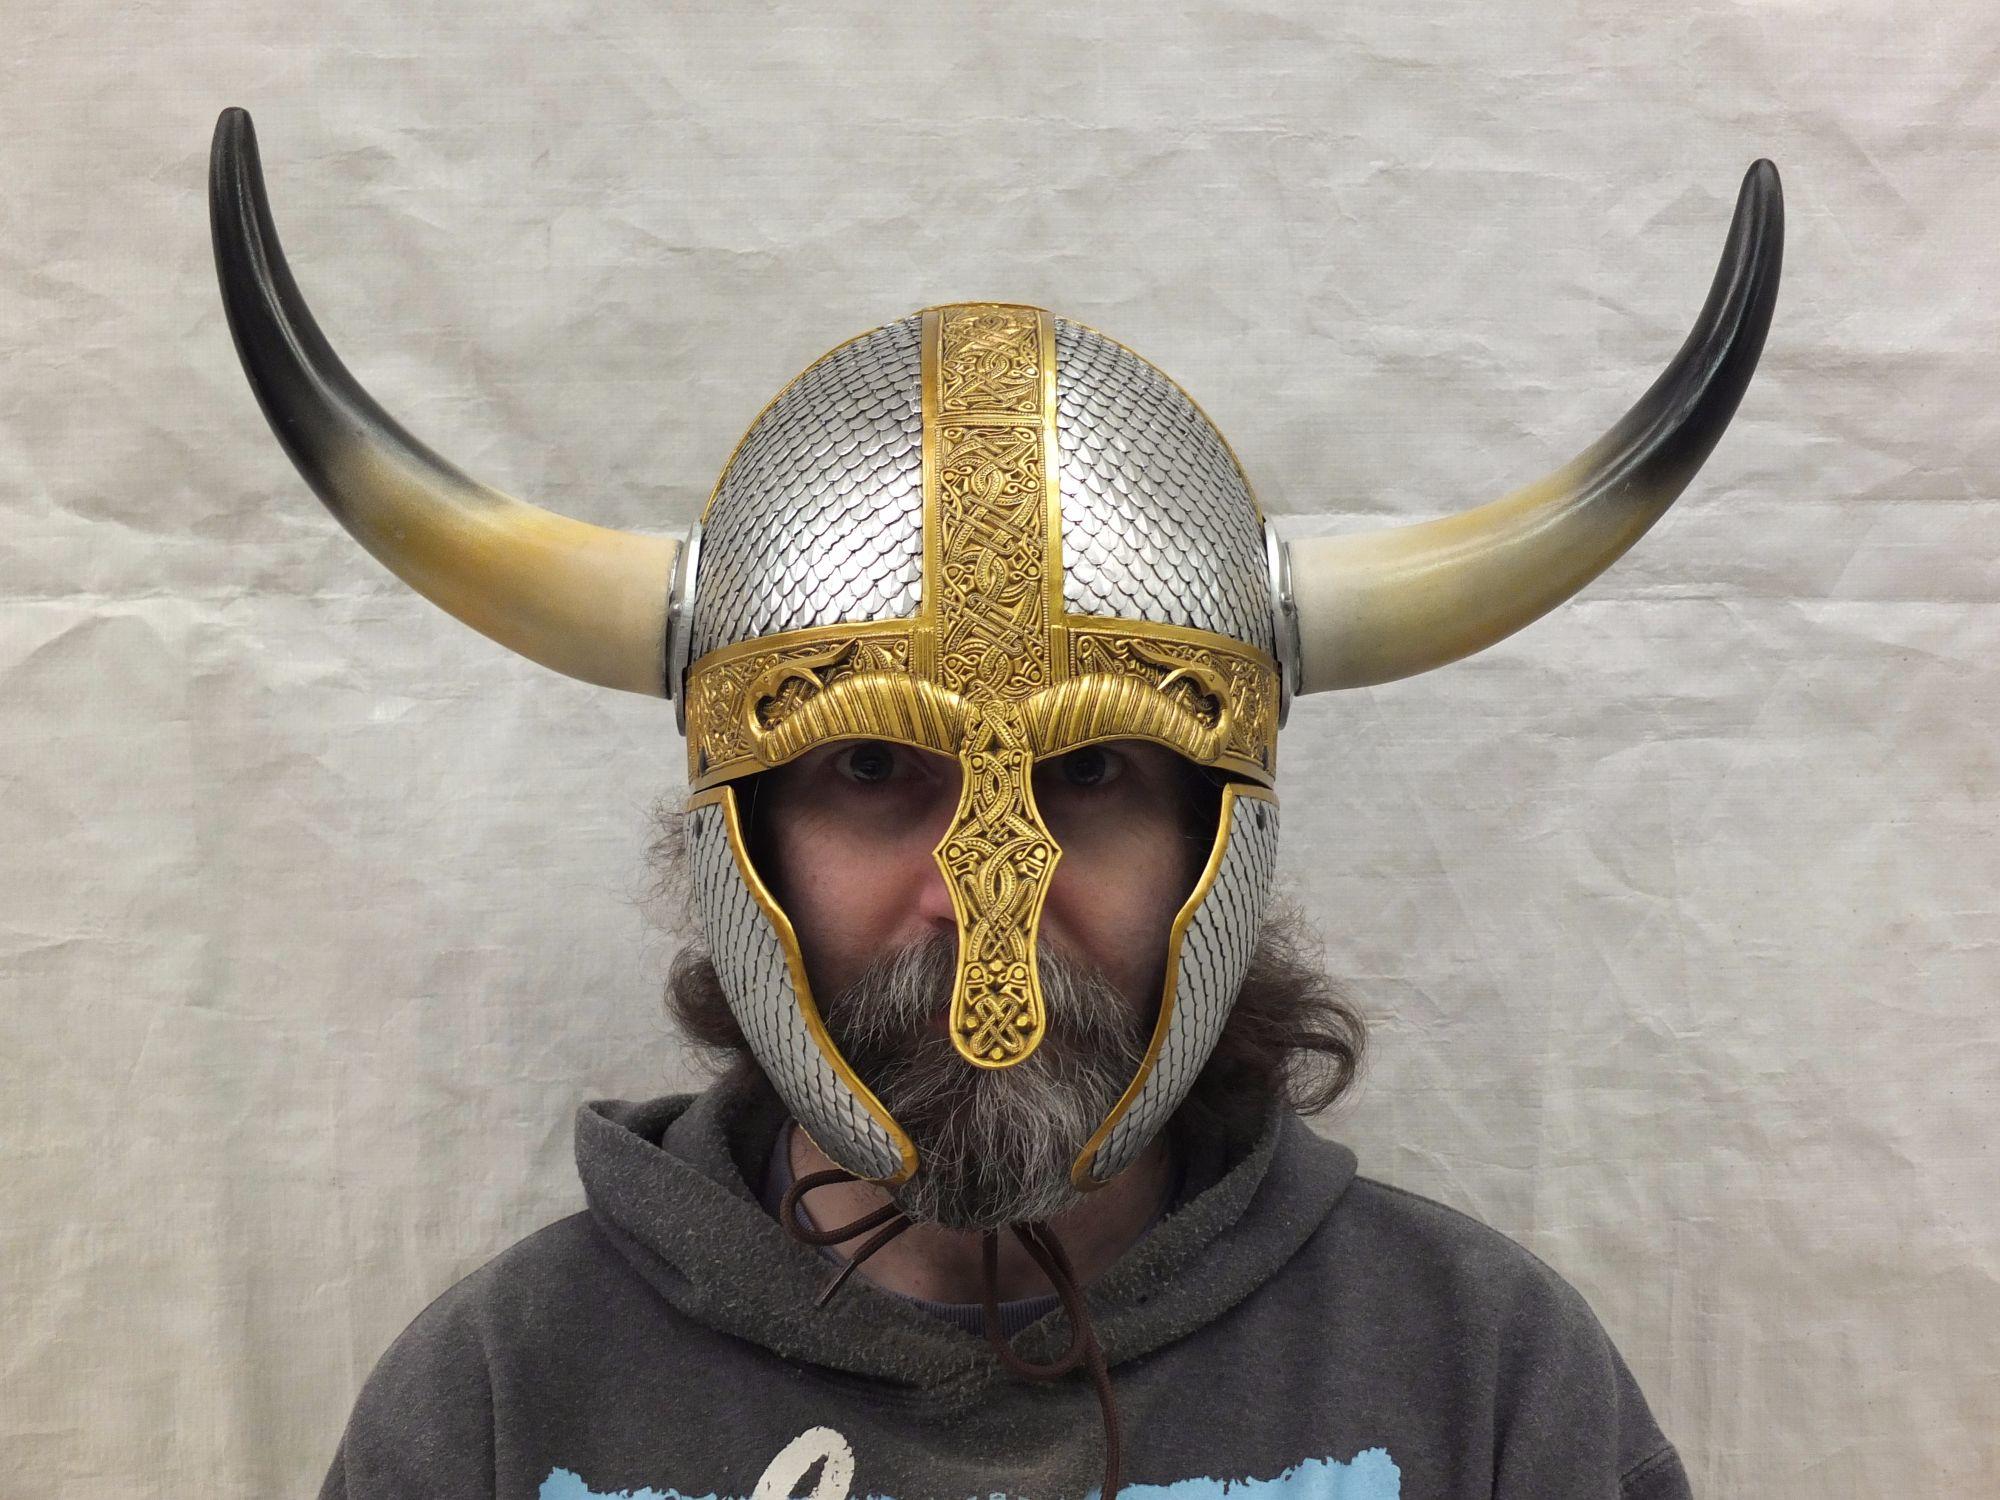 Horns added to Wyrmwick helmet